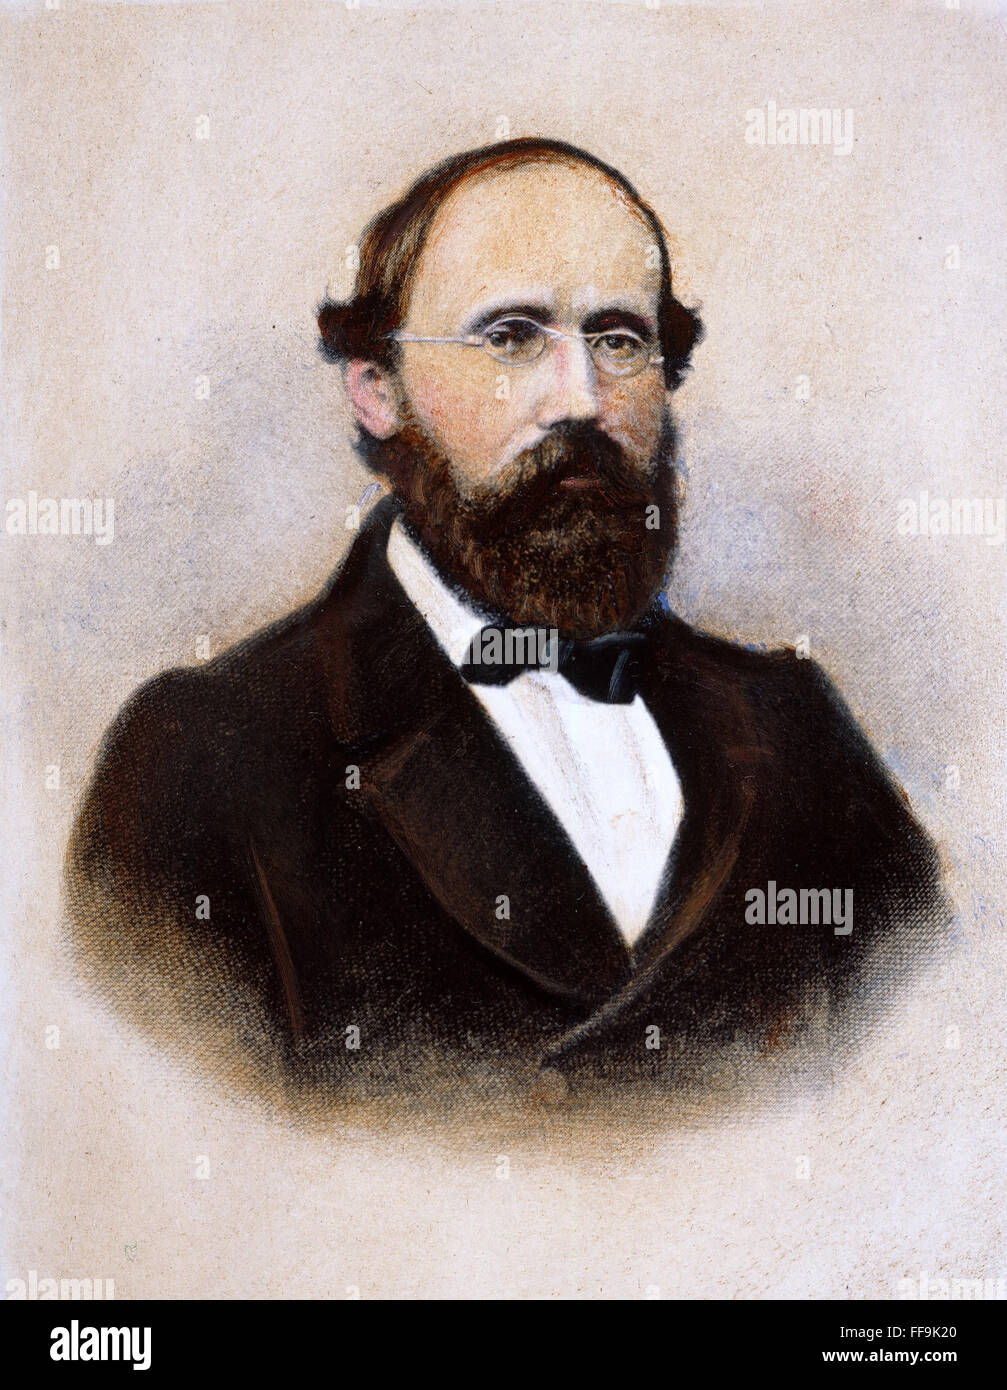 BERNHARD RIEMANN /n(1826-1866). Georg Friedrich Bernhard Riemann. Matematico tedesco: incisione, Tedesco, xix secolo. Foto Stock